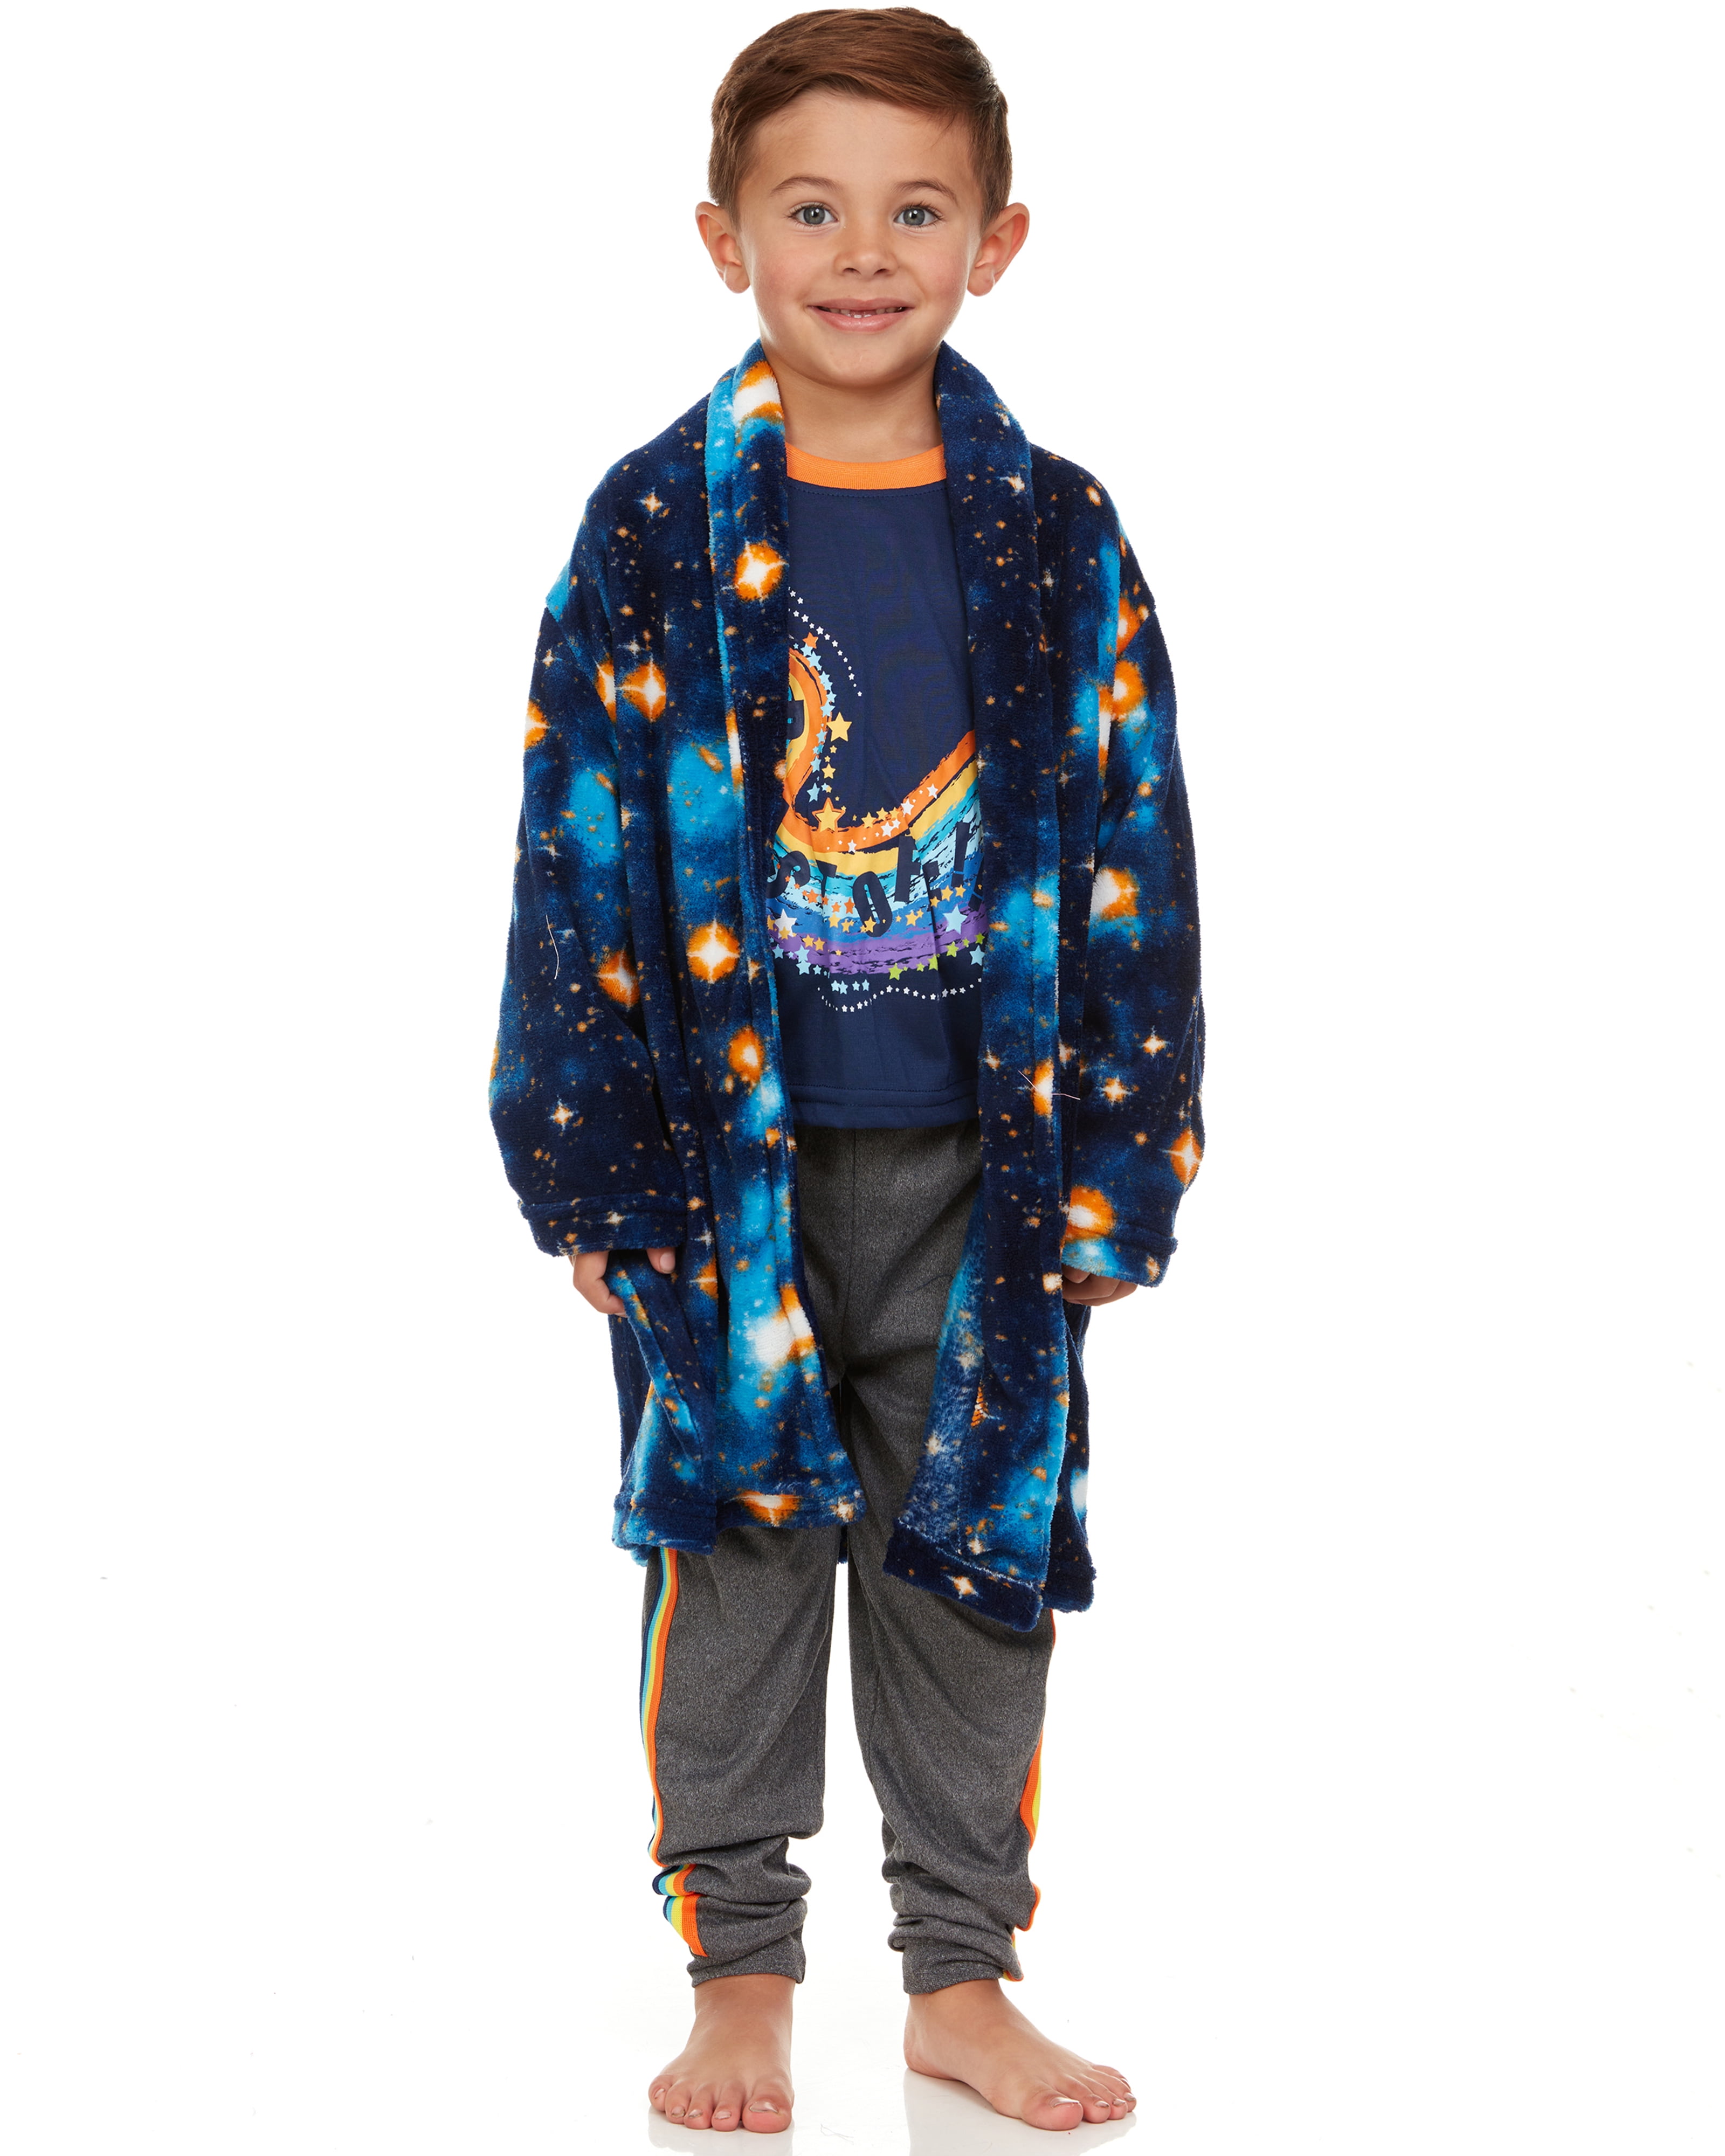 Lilo & Stitch Pyjamas Set Pour Enfants Garçons Filles Cartoon T-shirt  Pantalon Tenue Set Sleepwear